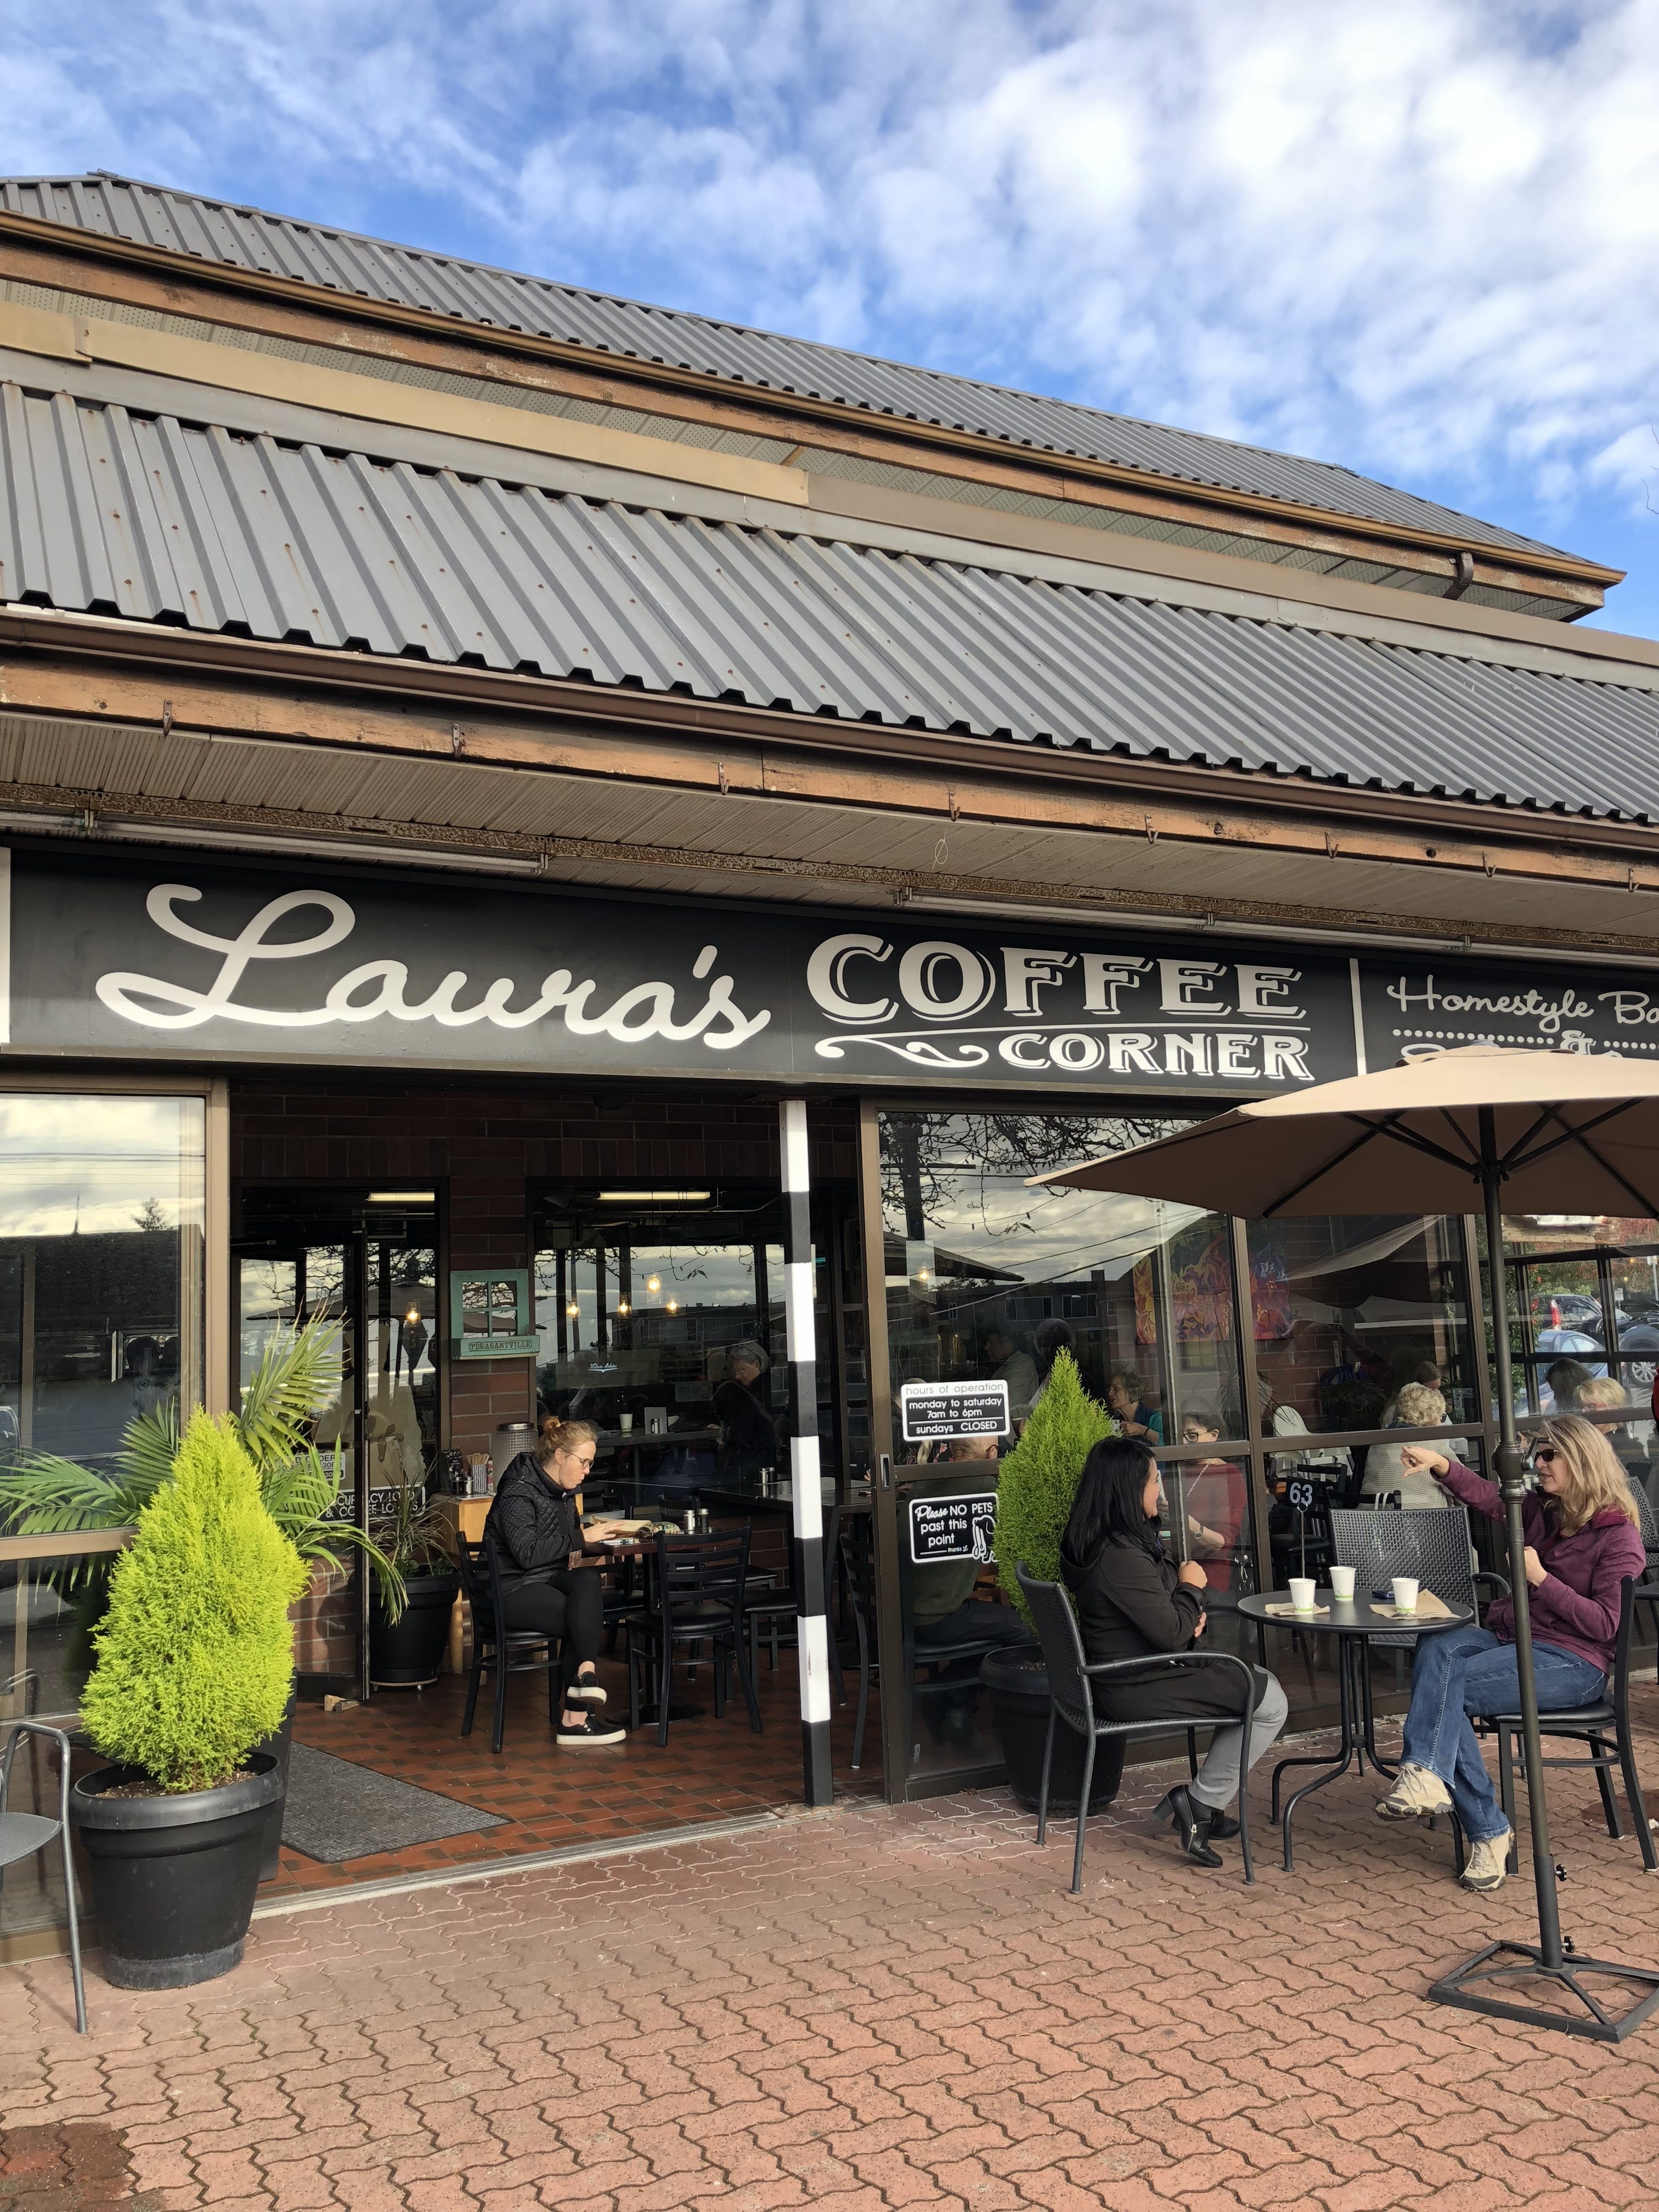 Laura’s Coffee Corner at Taste White Rock